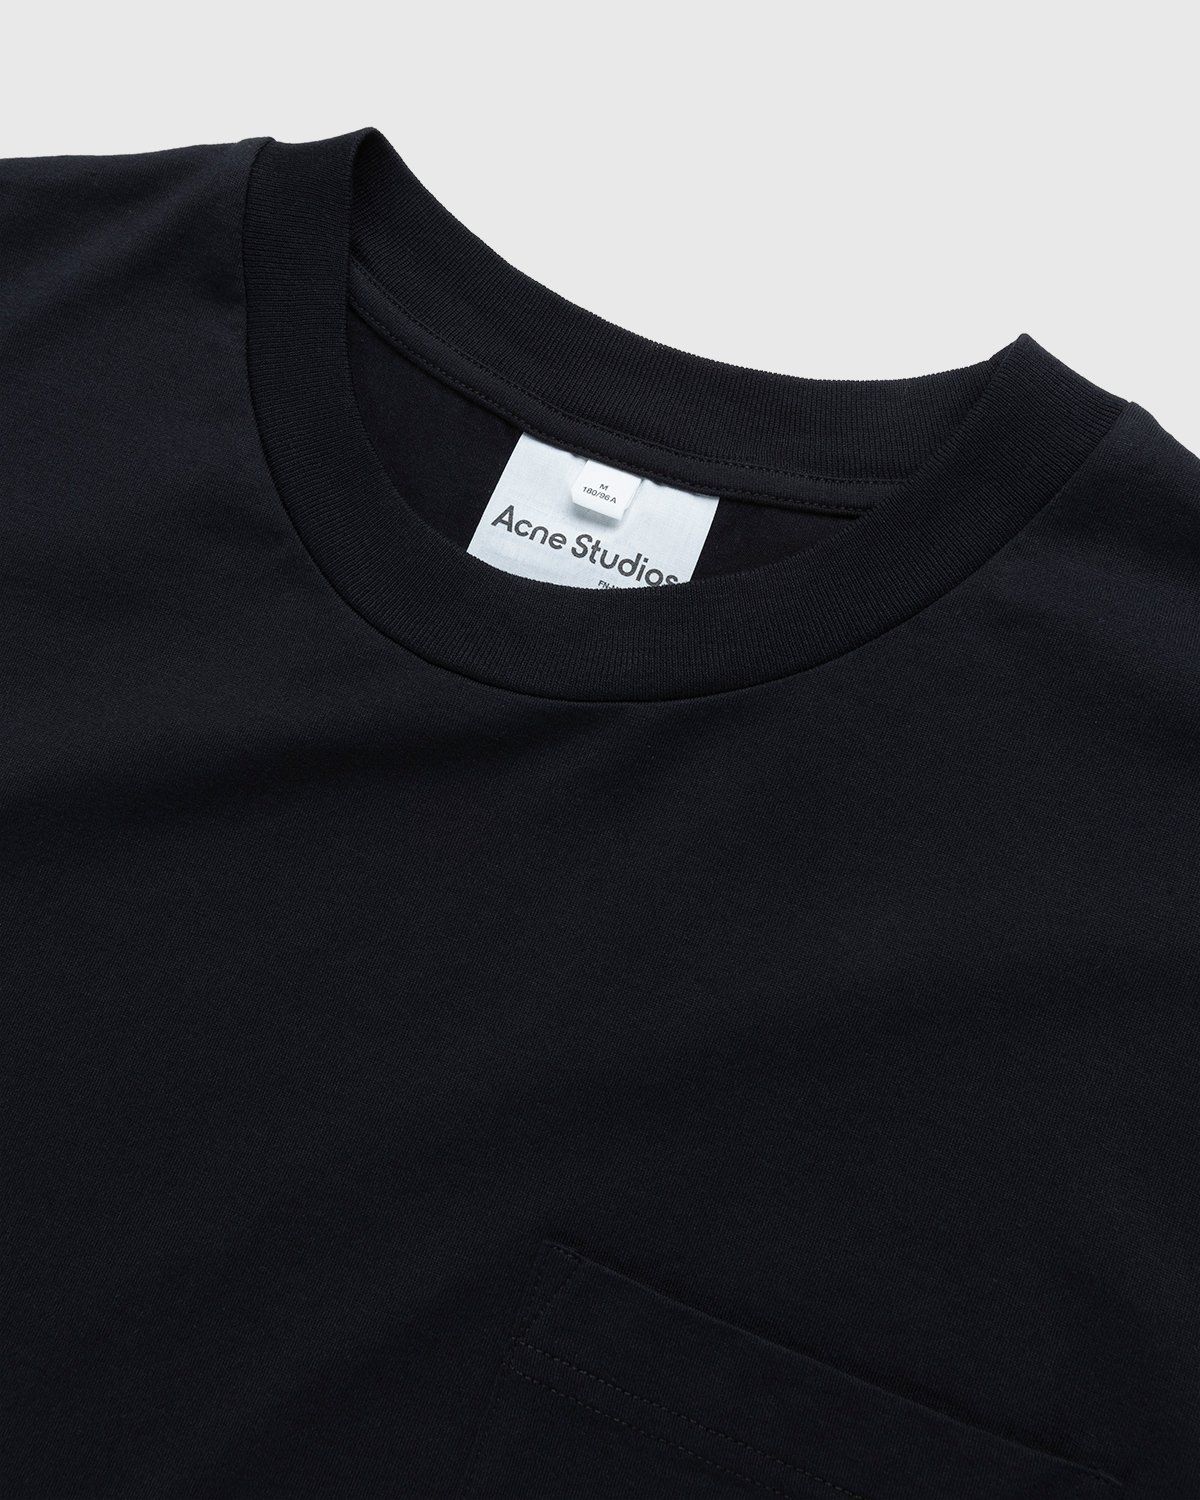 Acne Studios – Short Sleeve Pocket T-Shirt Black - T-shirts - Black - Image 4